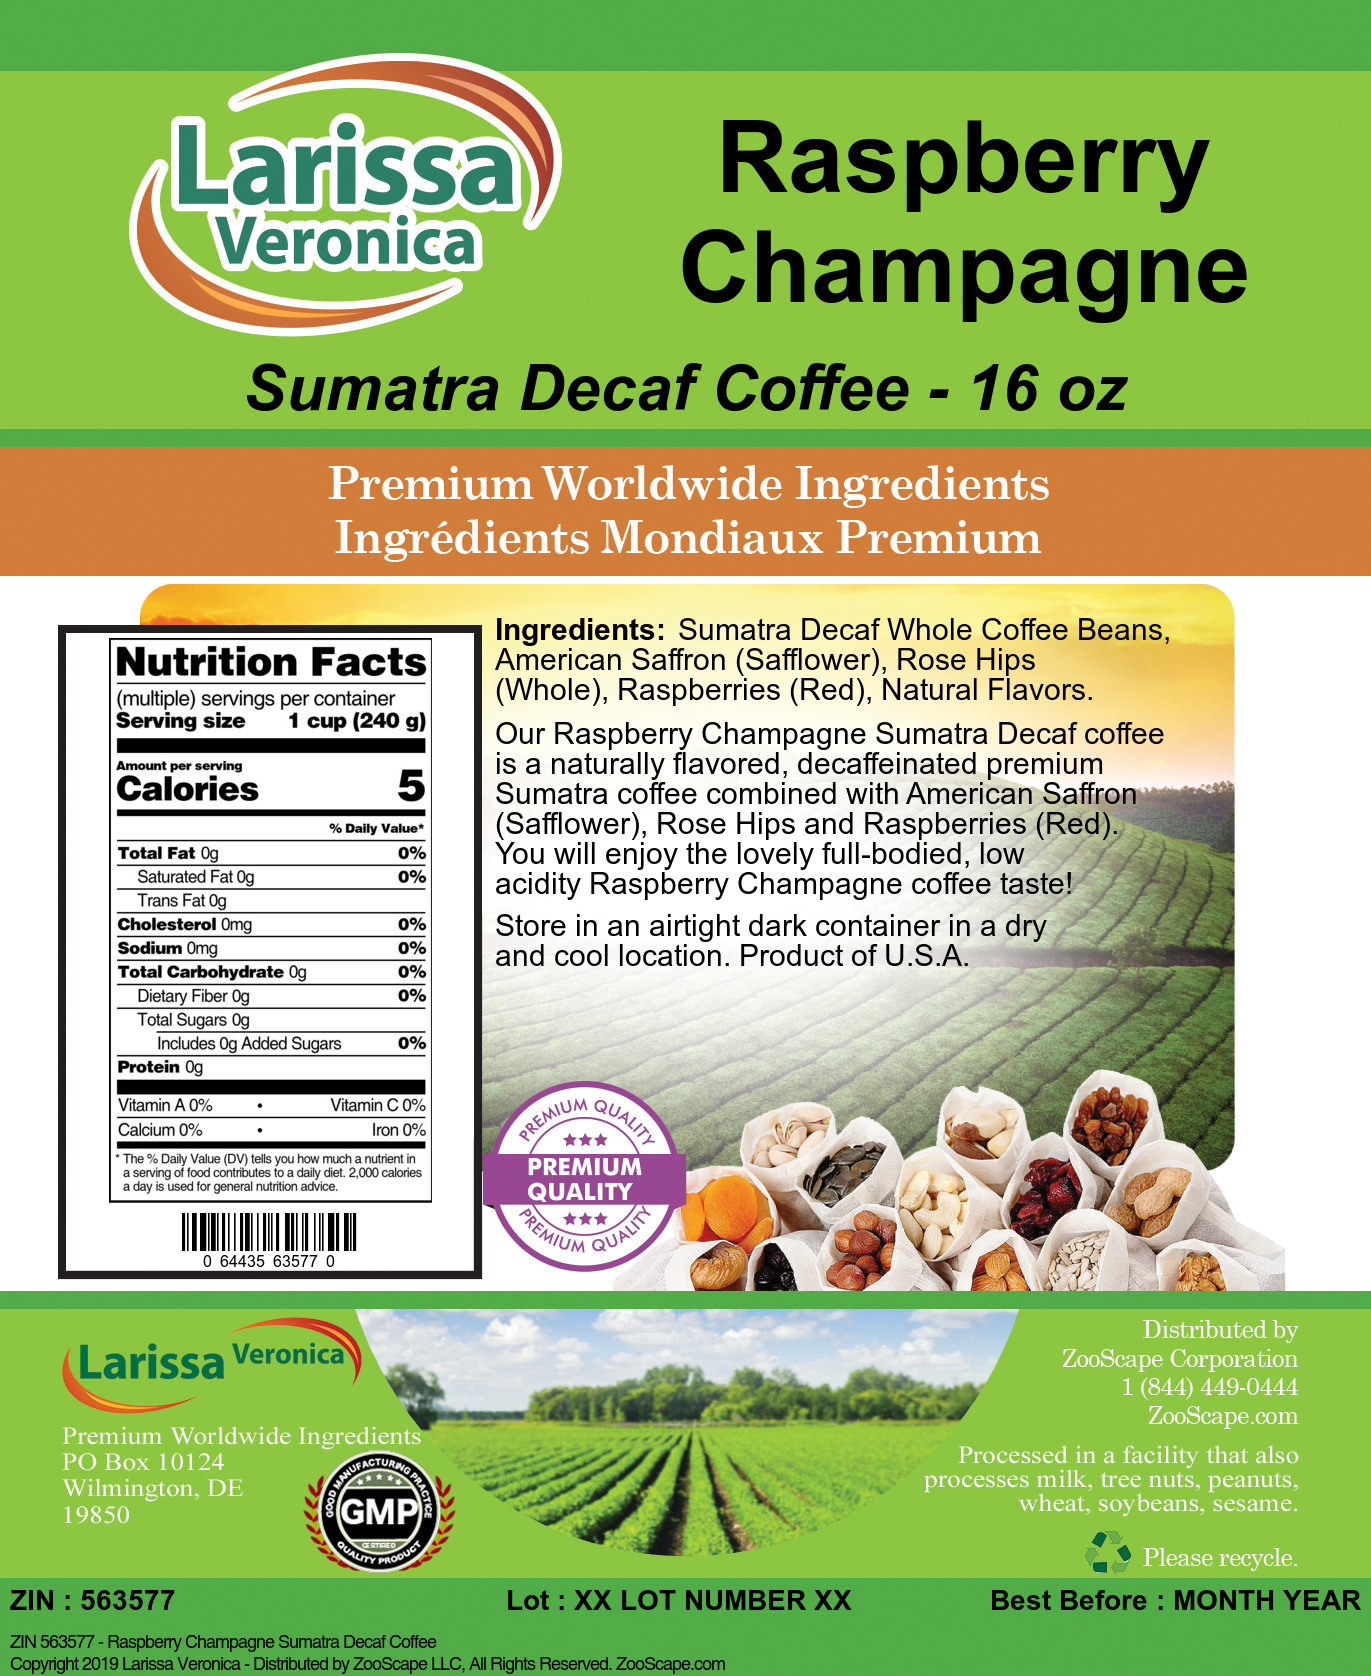 Raspberry Champagne Sumatra Decaf Coffee - Label